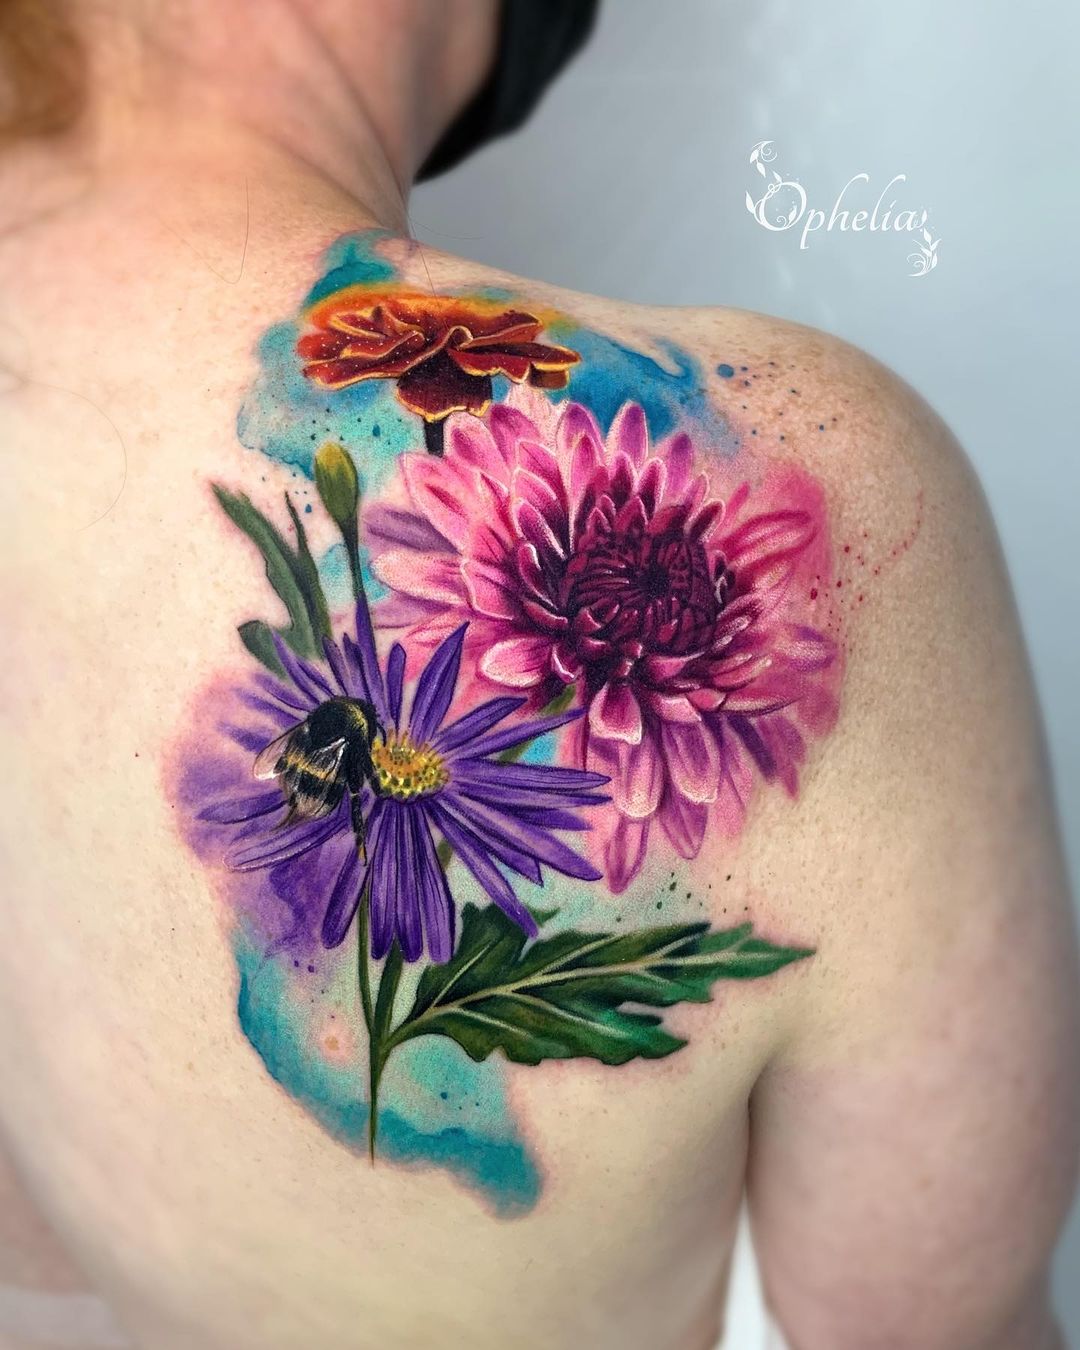 Tatuaje de flor de aster colorida en la espalda.